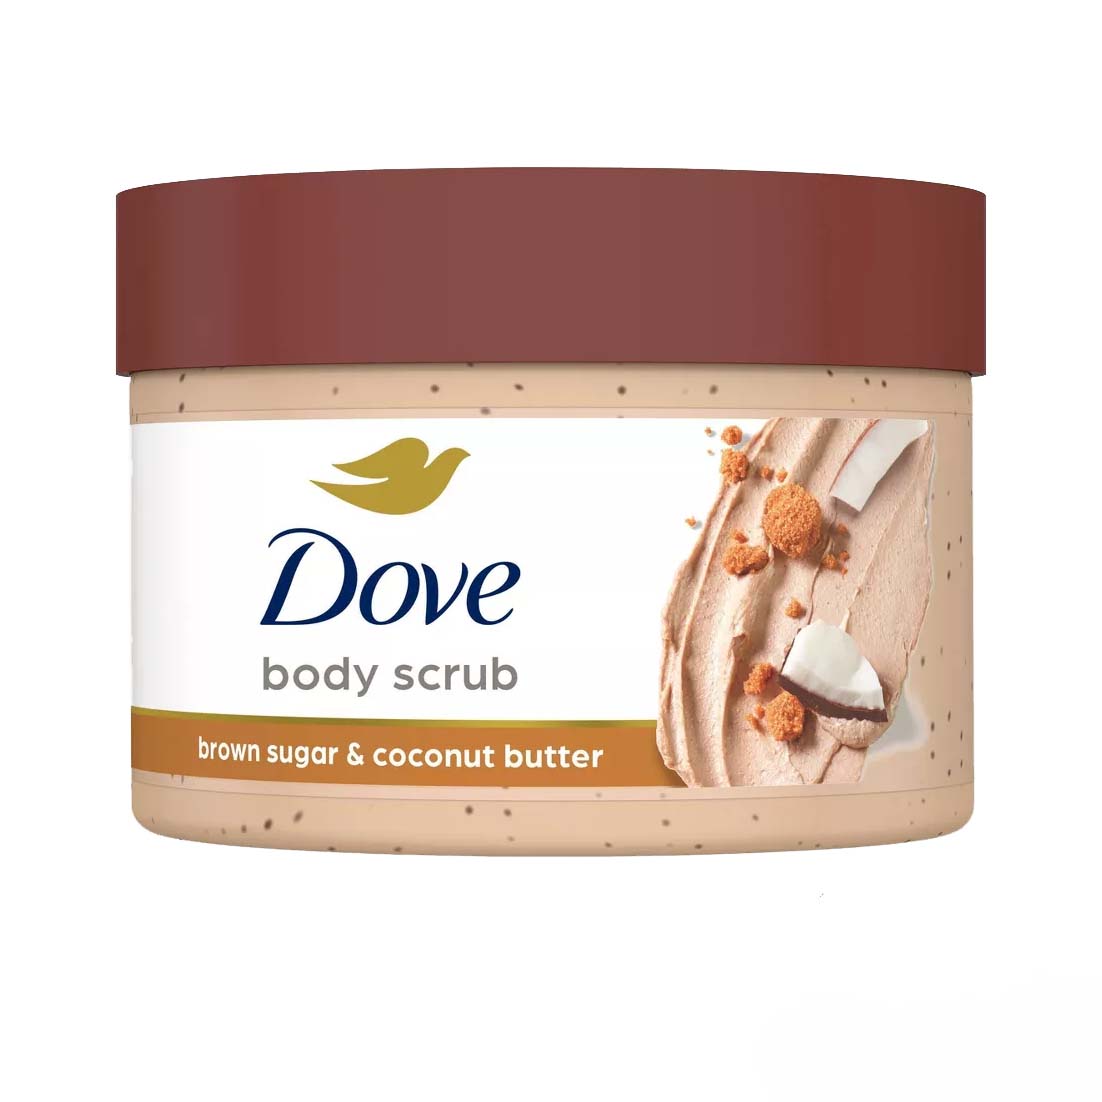 Dove Brown Sugar & Coconut Butter Exfoliating Body Scrub in a brown tub